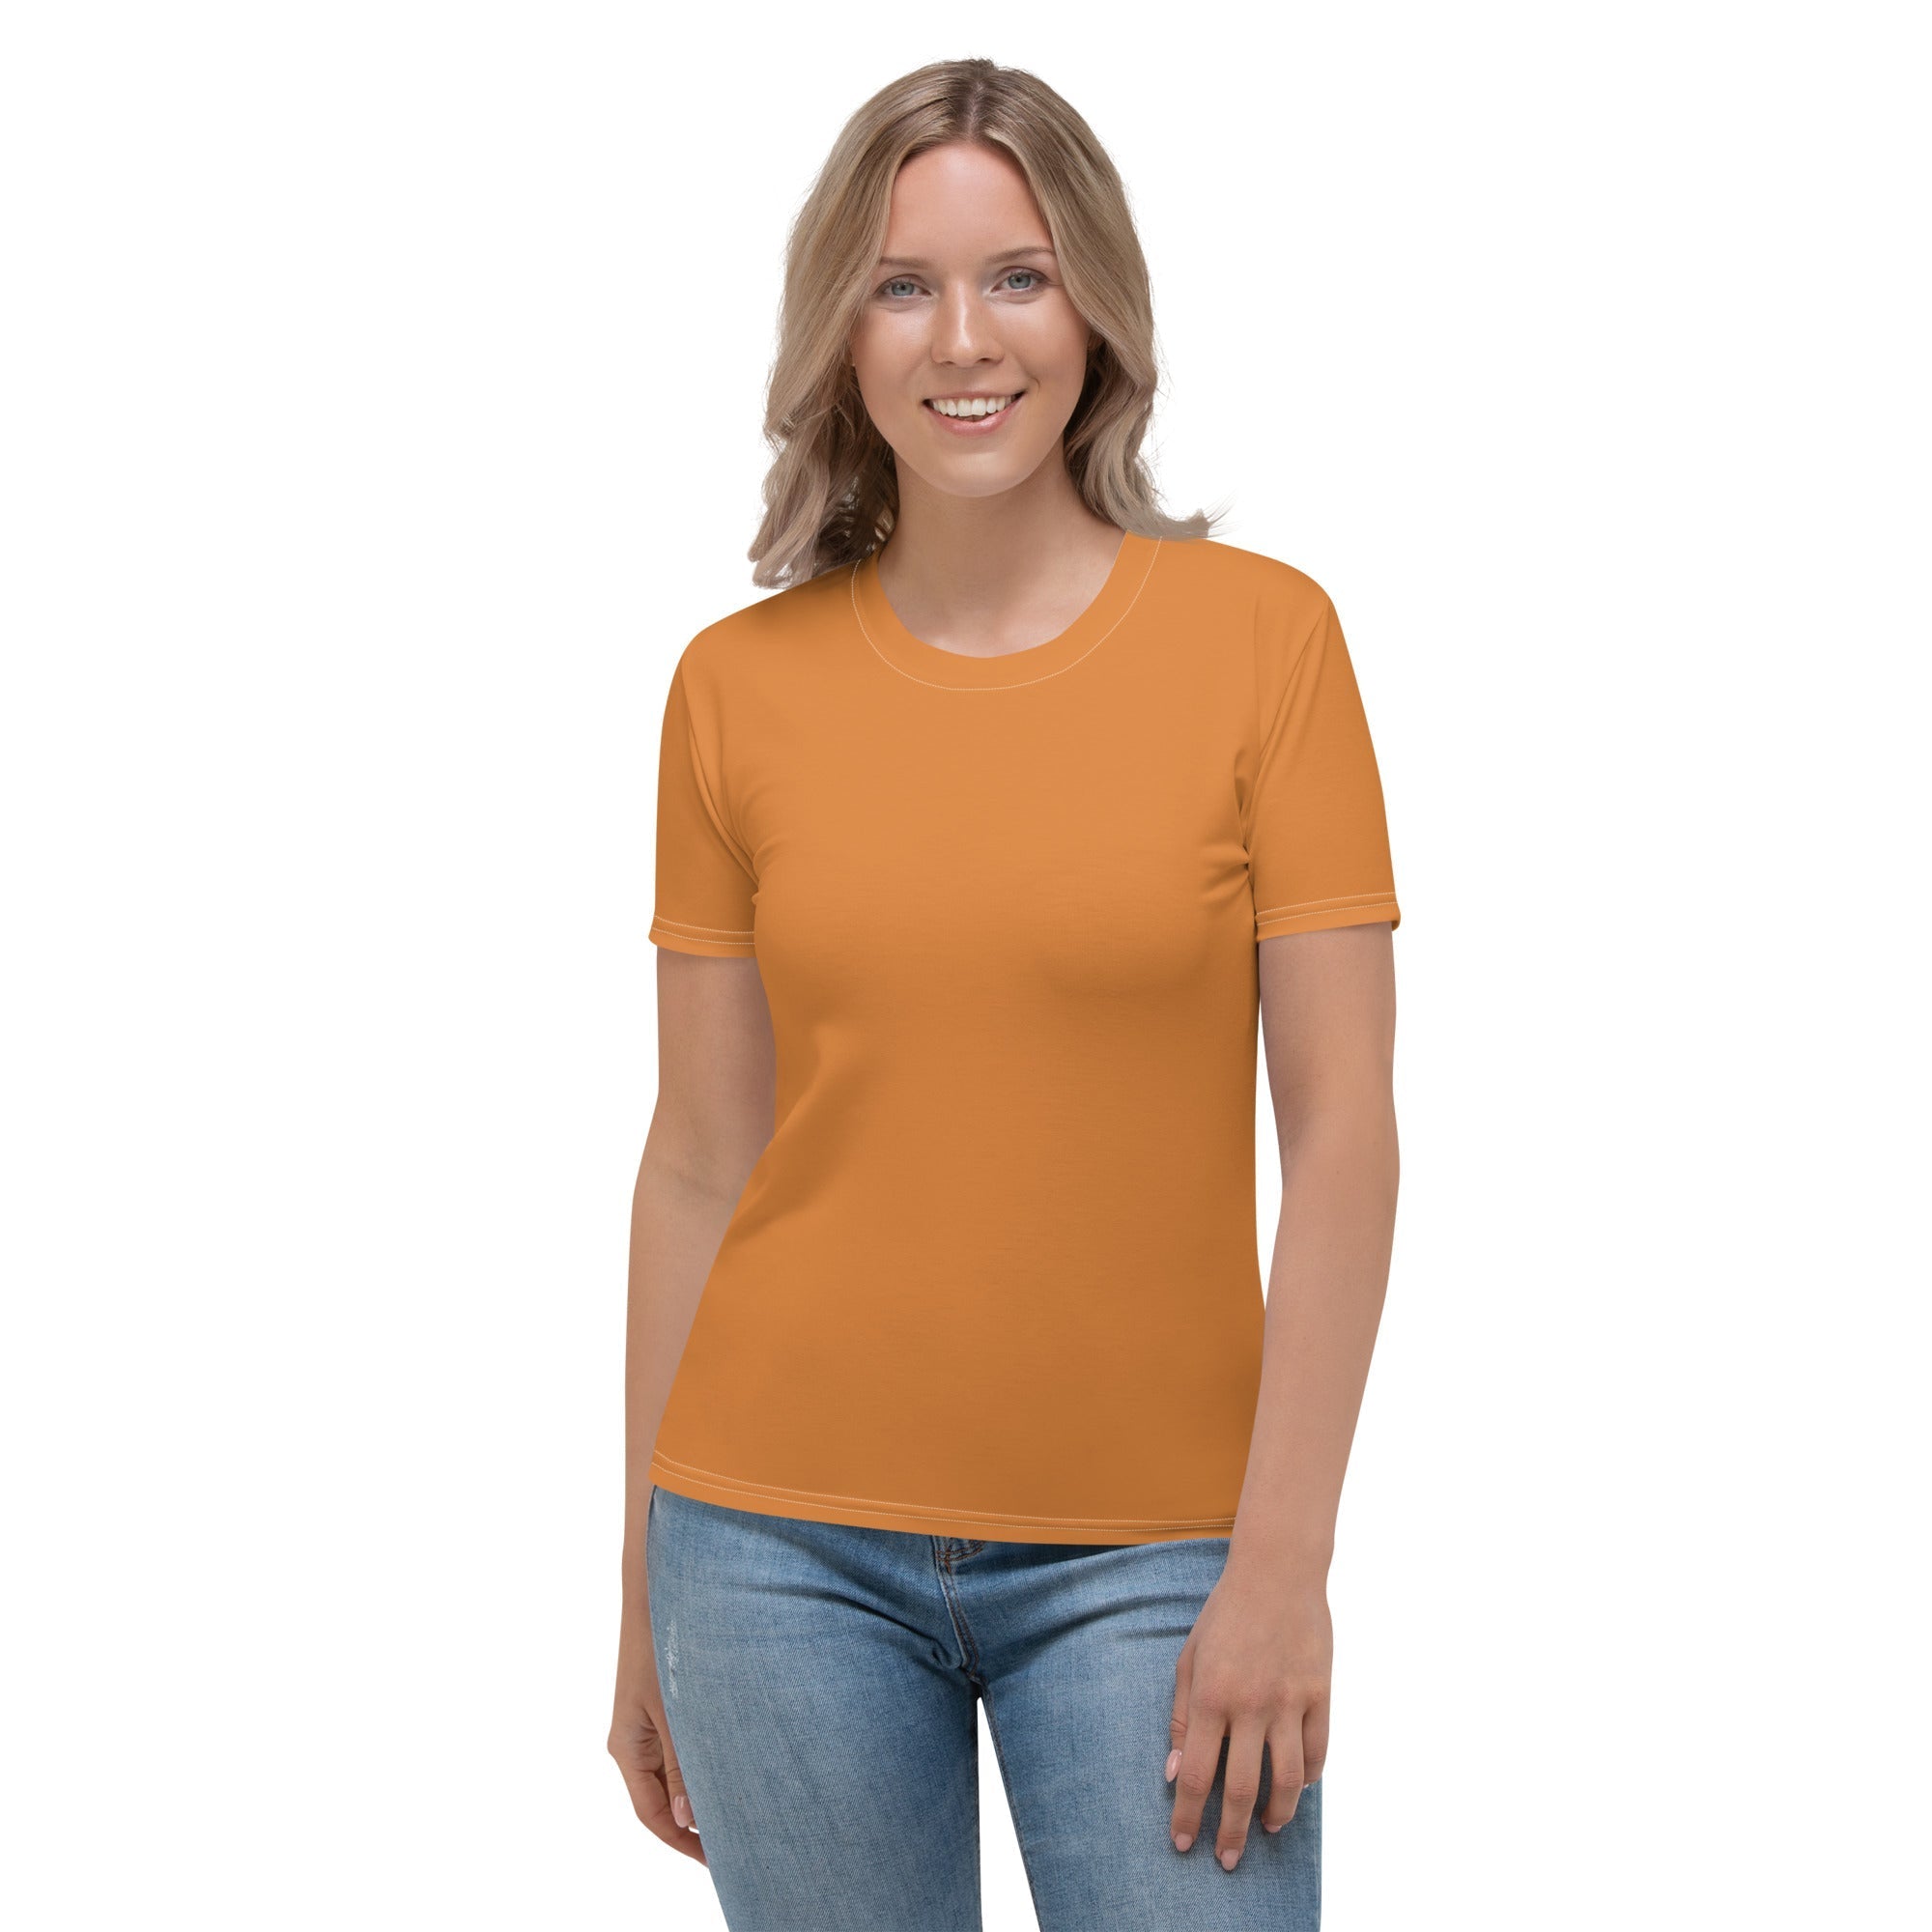 Tangerine Orange T-shirt